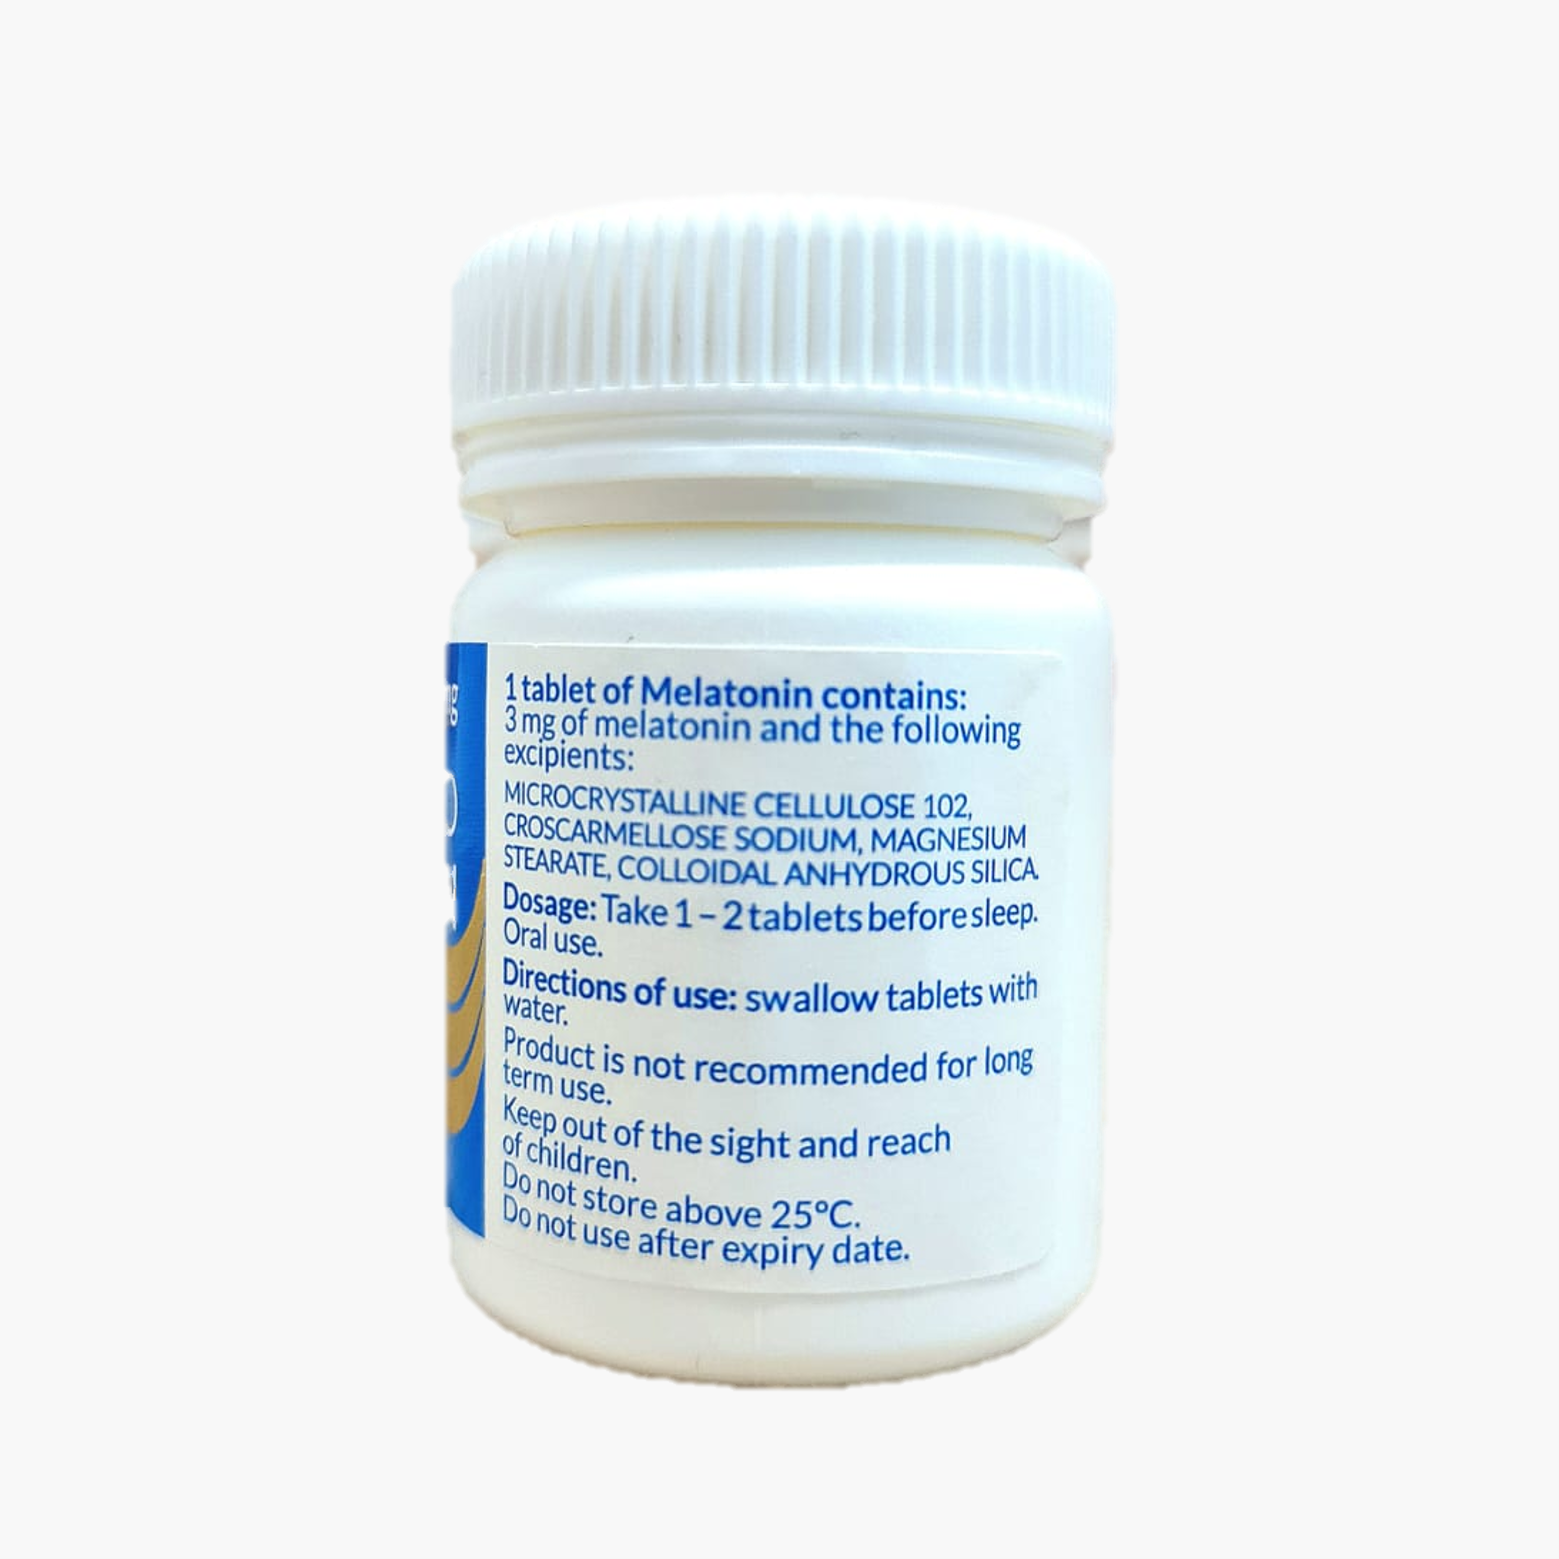 SHUIDIHAO Melatonin 3mg 60 Tablets